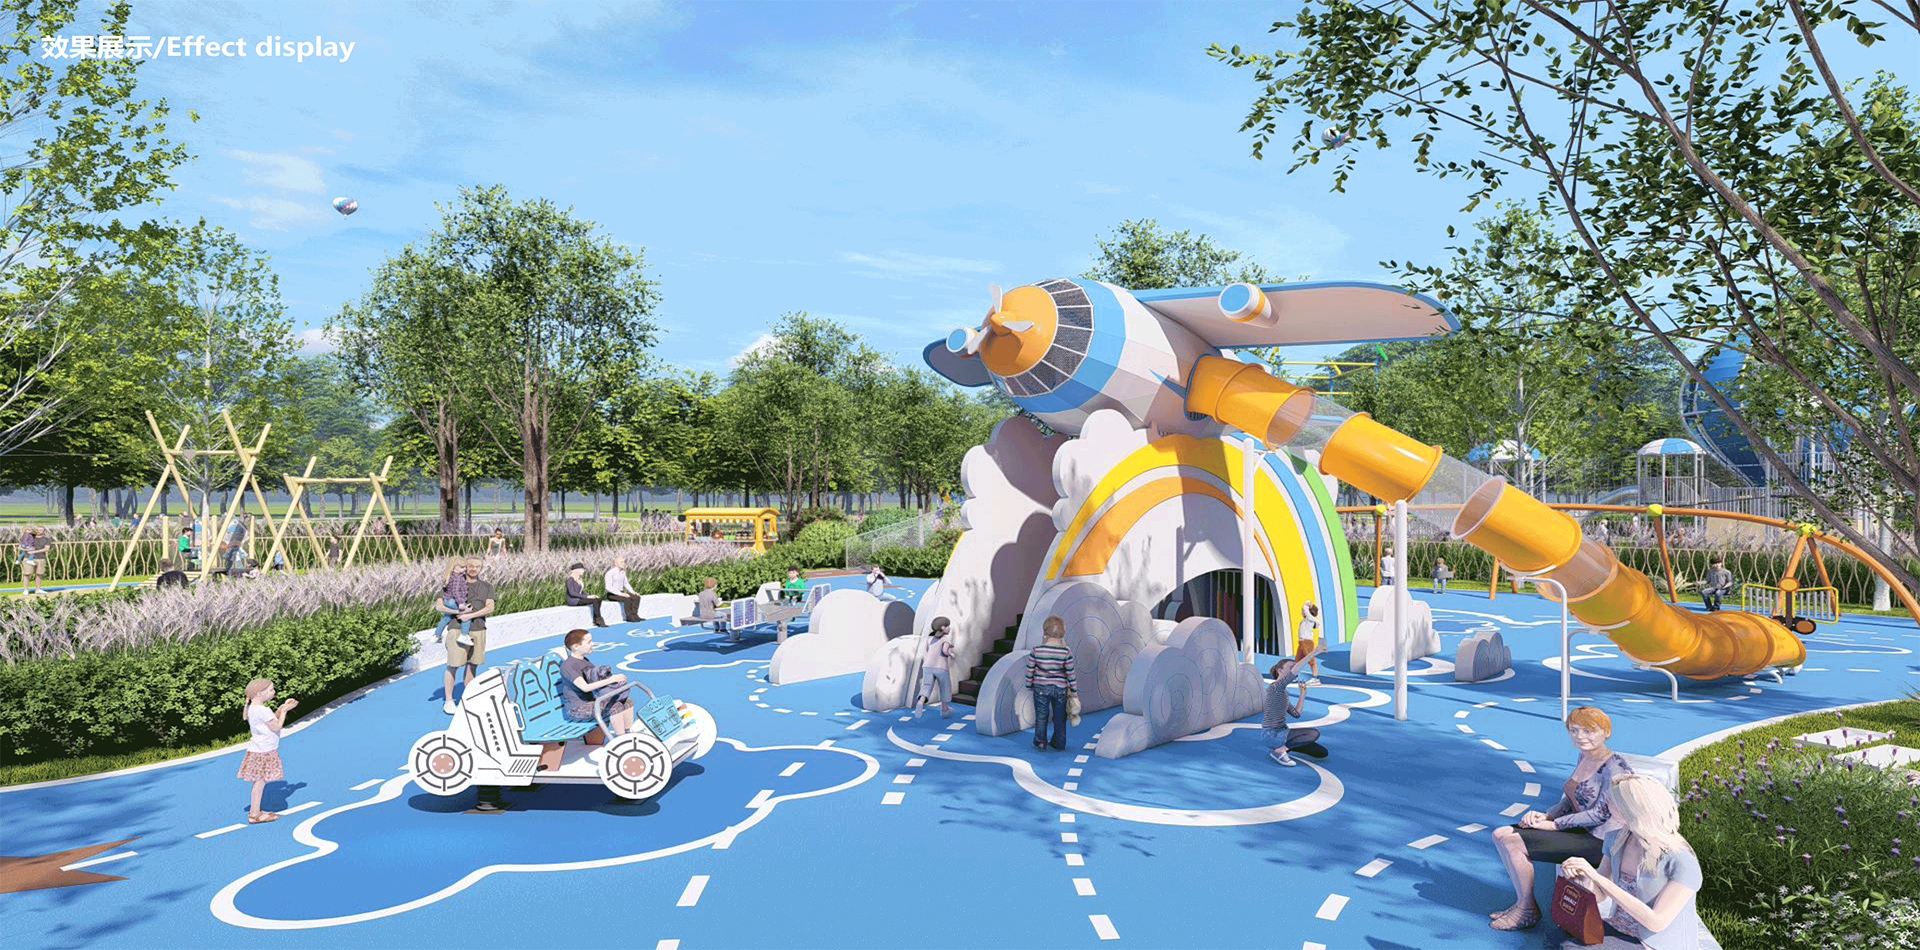 General Aviation Themed Park Playground in Gansu, China